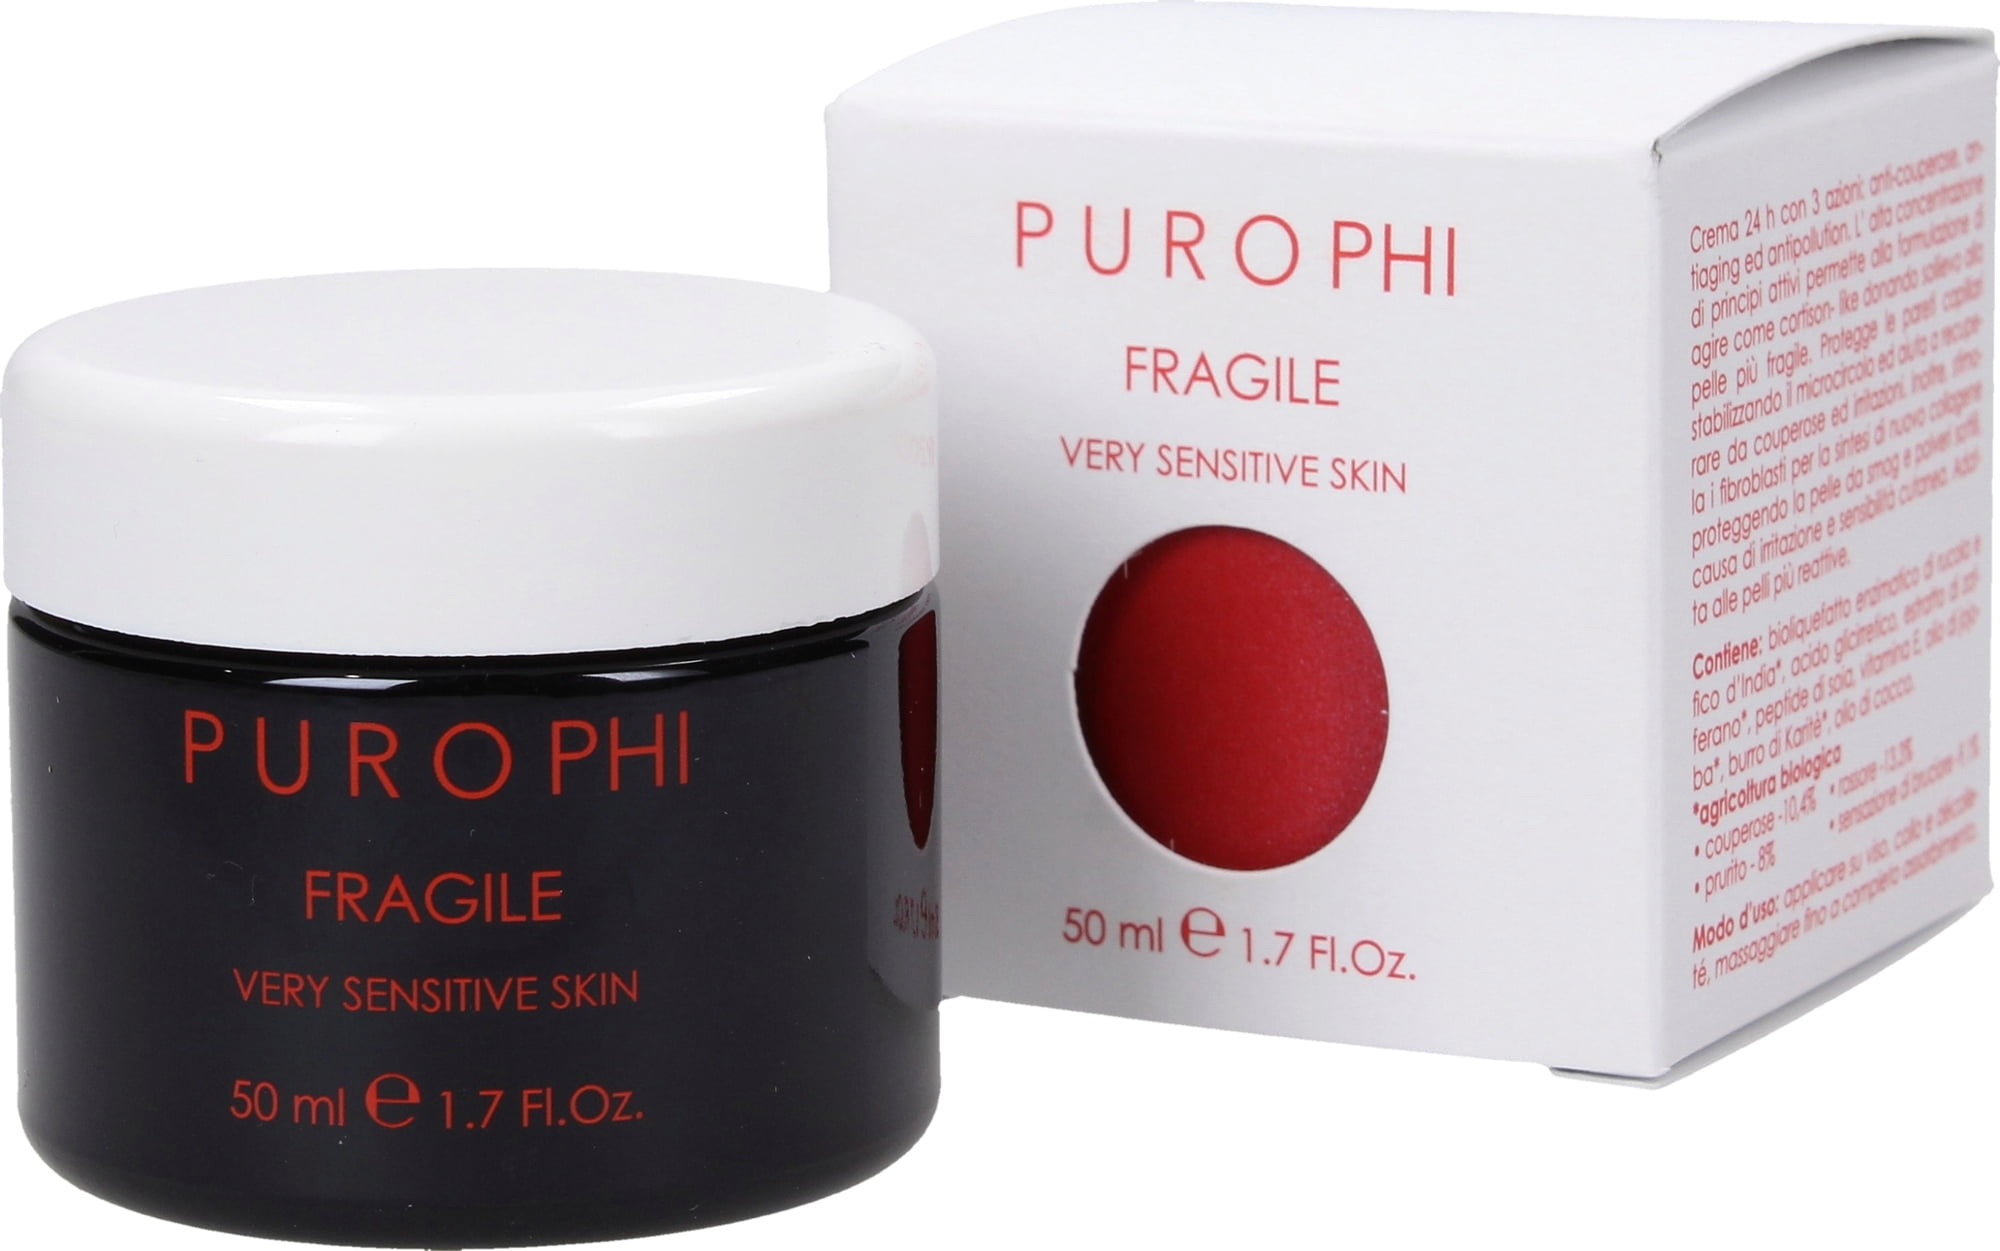 PUROPHI Fragile - Very Sensitive Skin